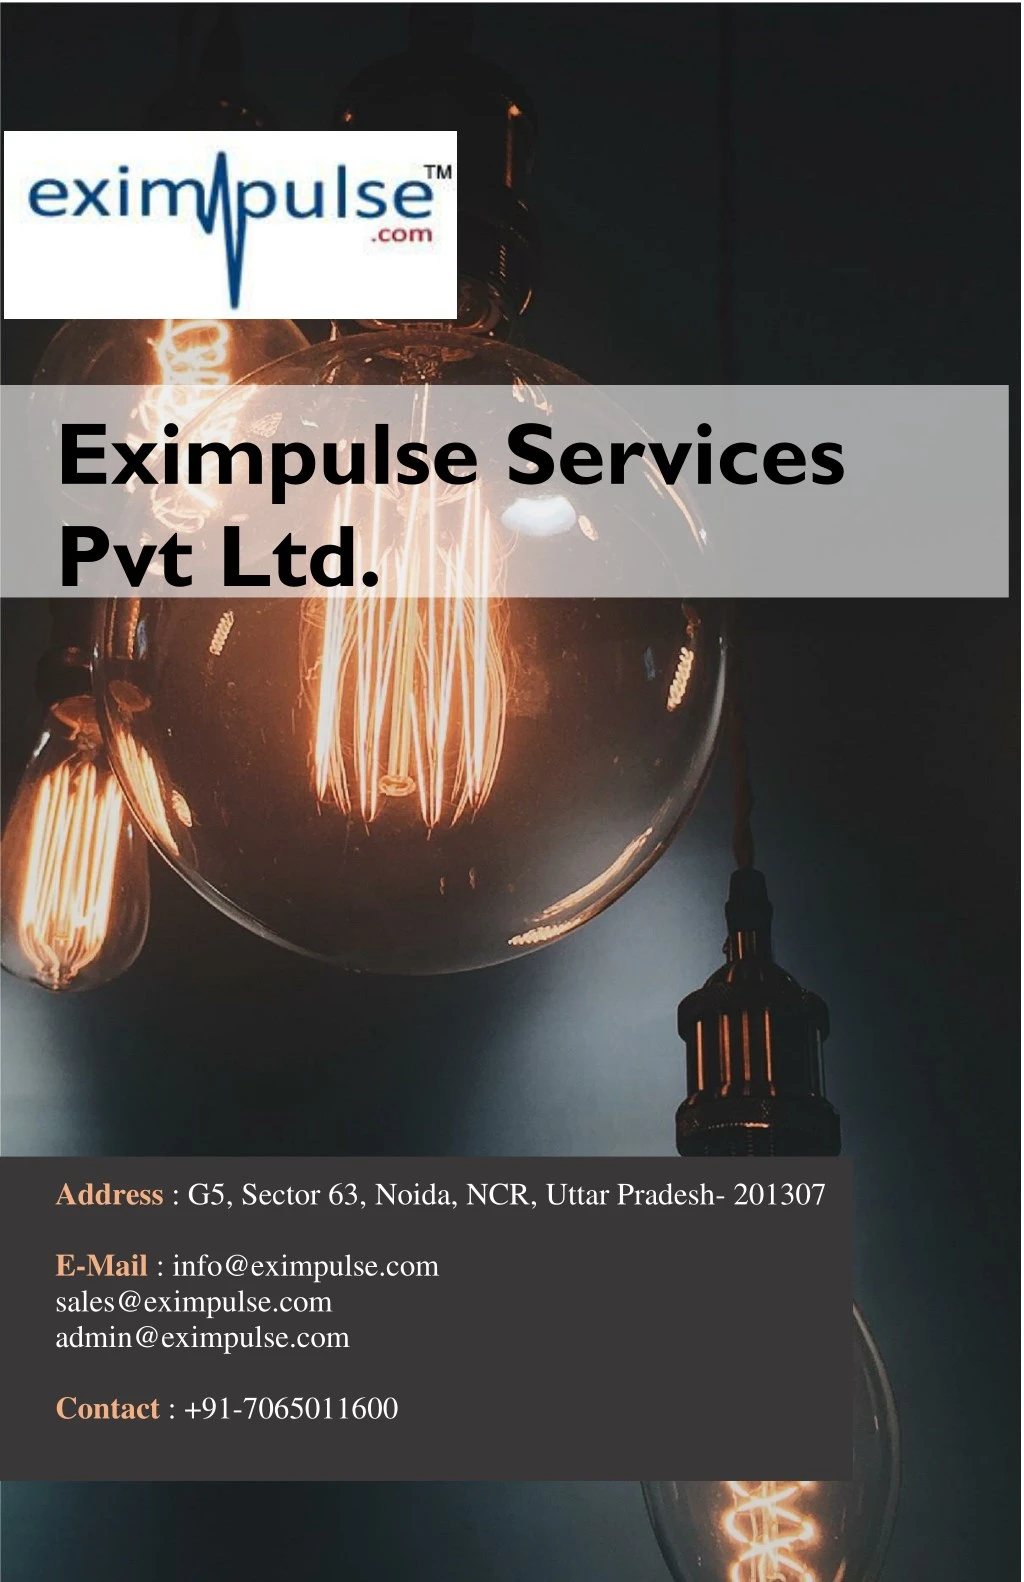 eximpulse services pvt ltd